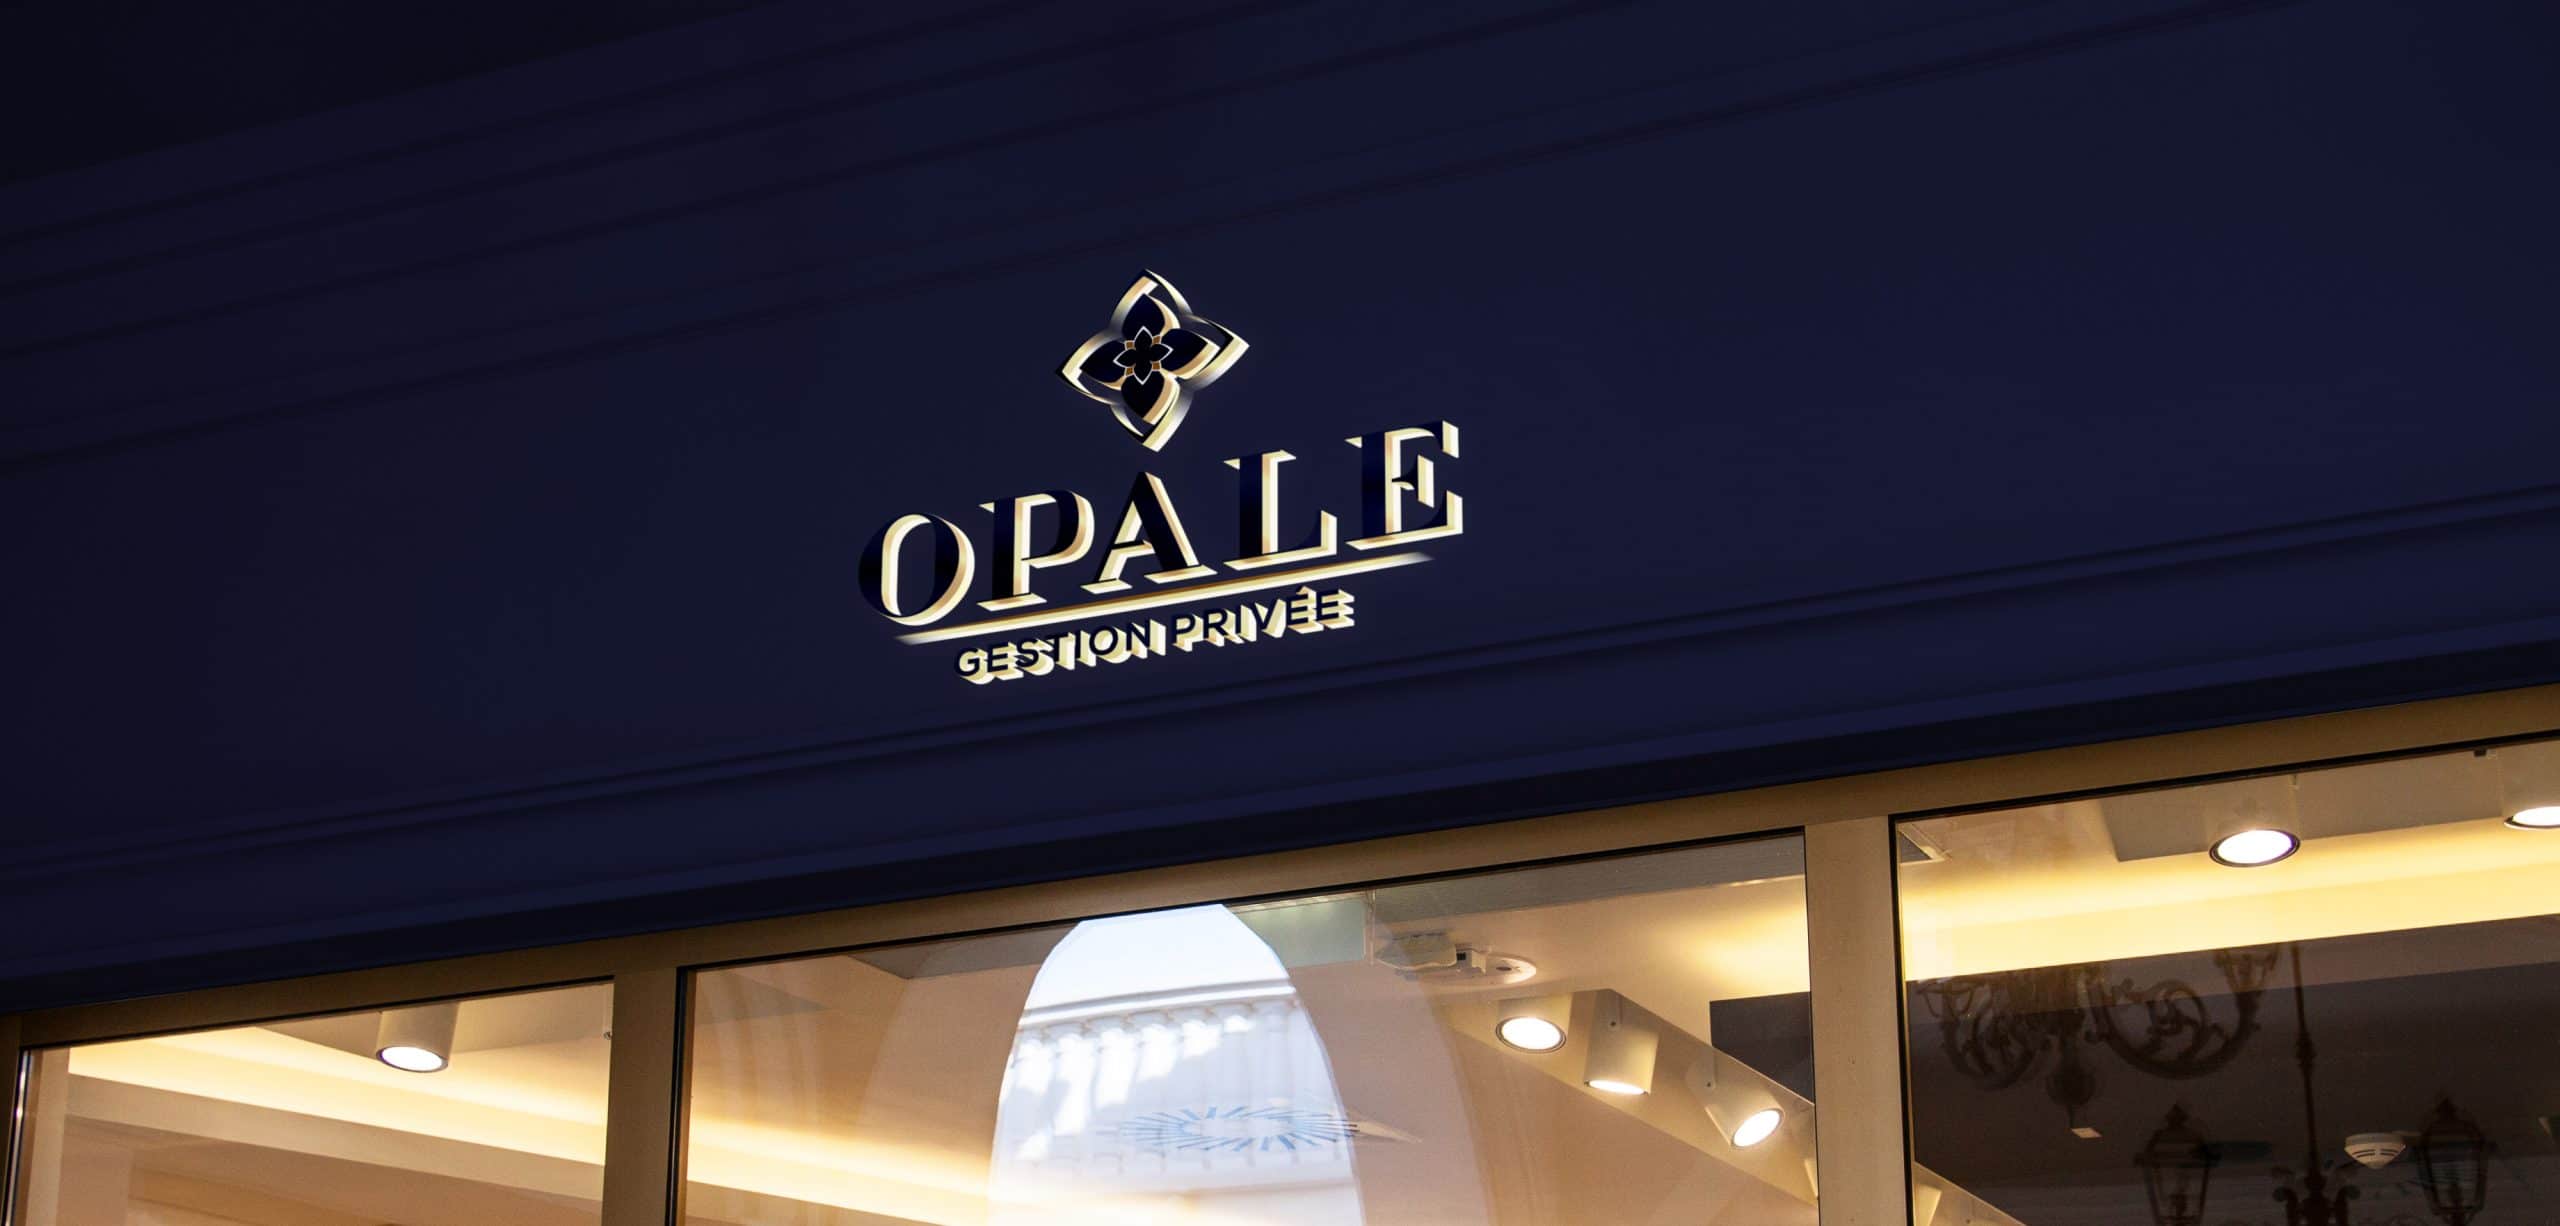 OPALE GESTION PRIVÉE_brand identity 